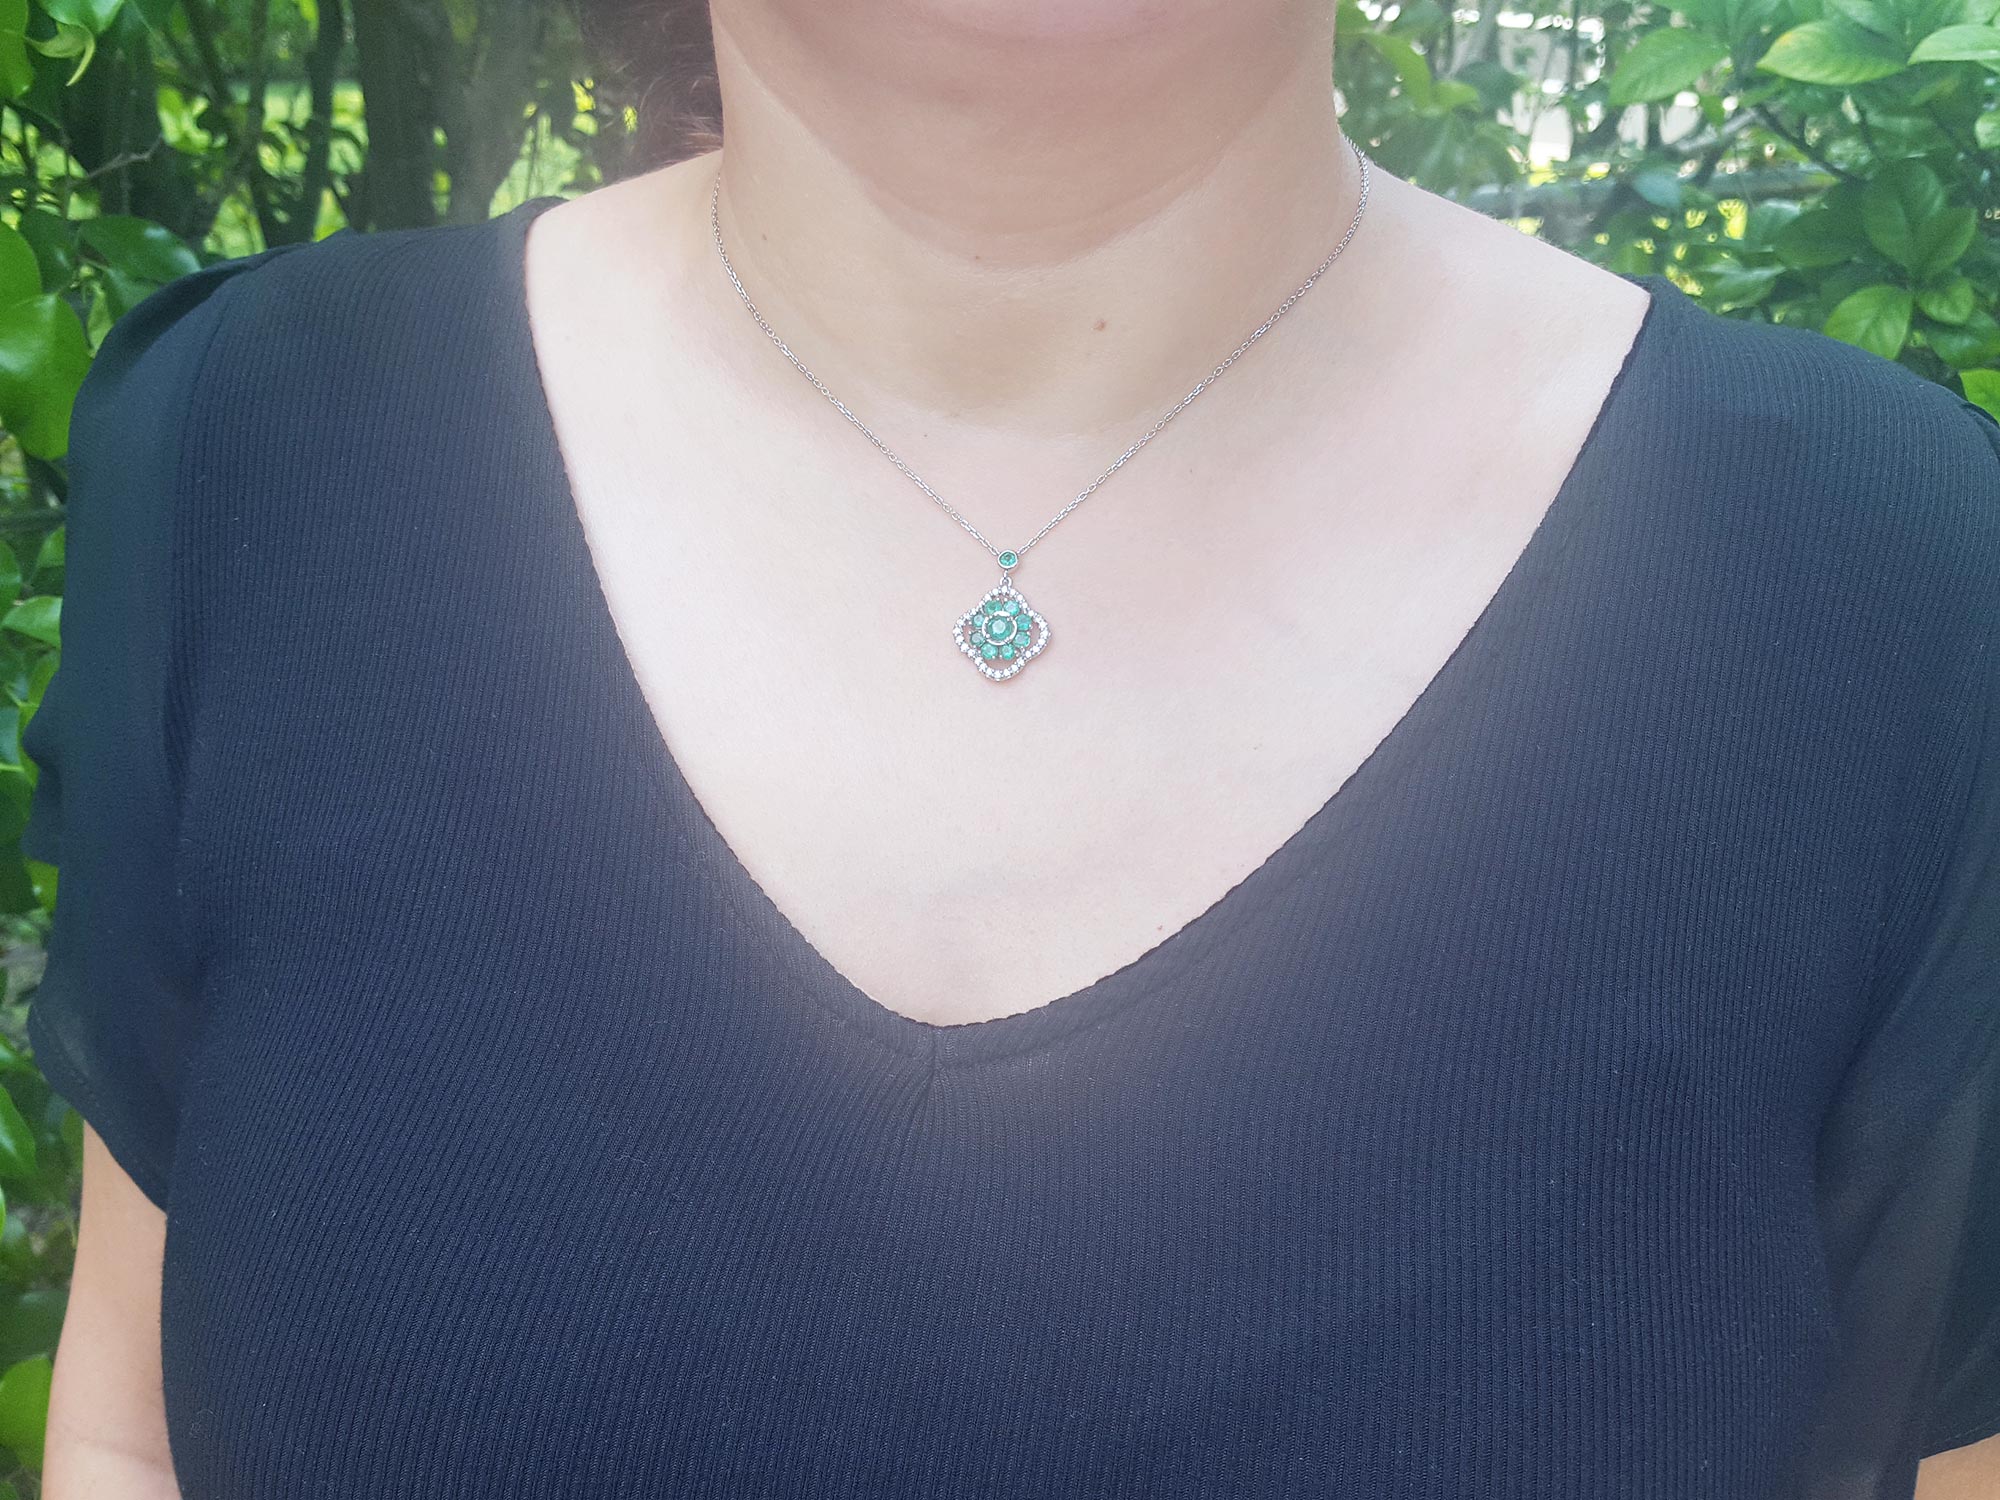 Genuine emerald necklace